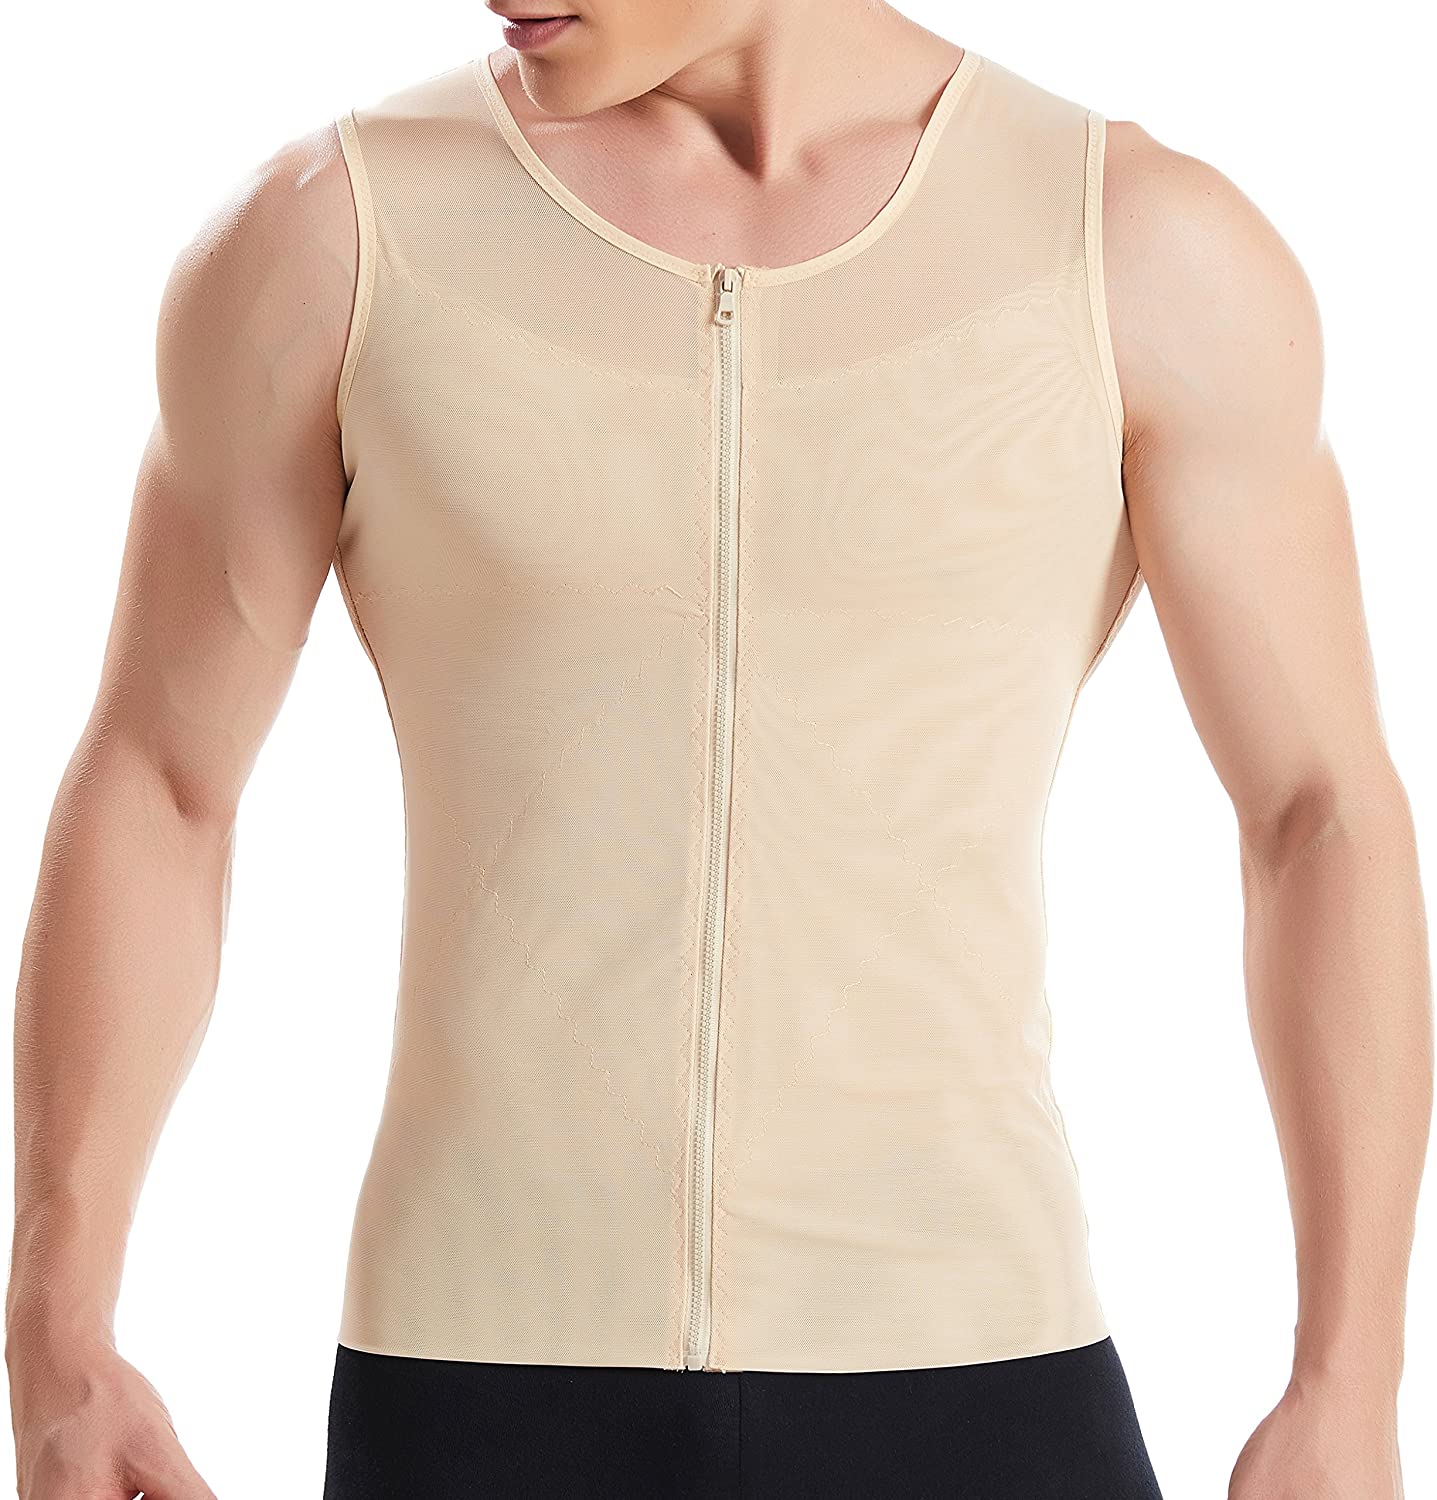 HANERDUN Mens Body Shaper Slimming Shirt Compression Vest Elastic Slim Shapewear